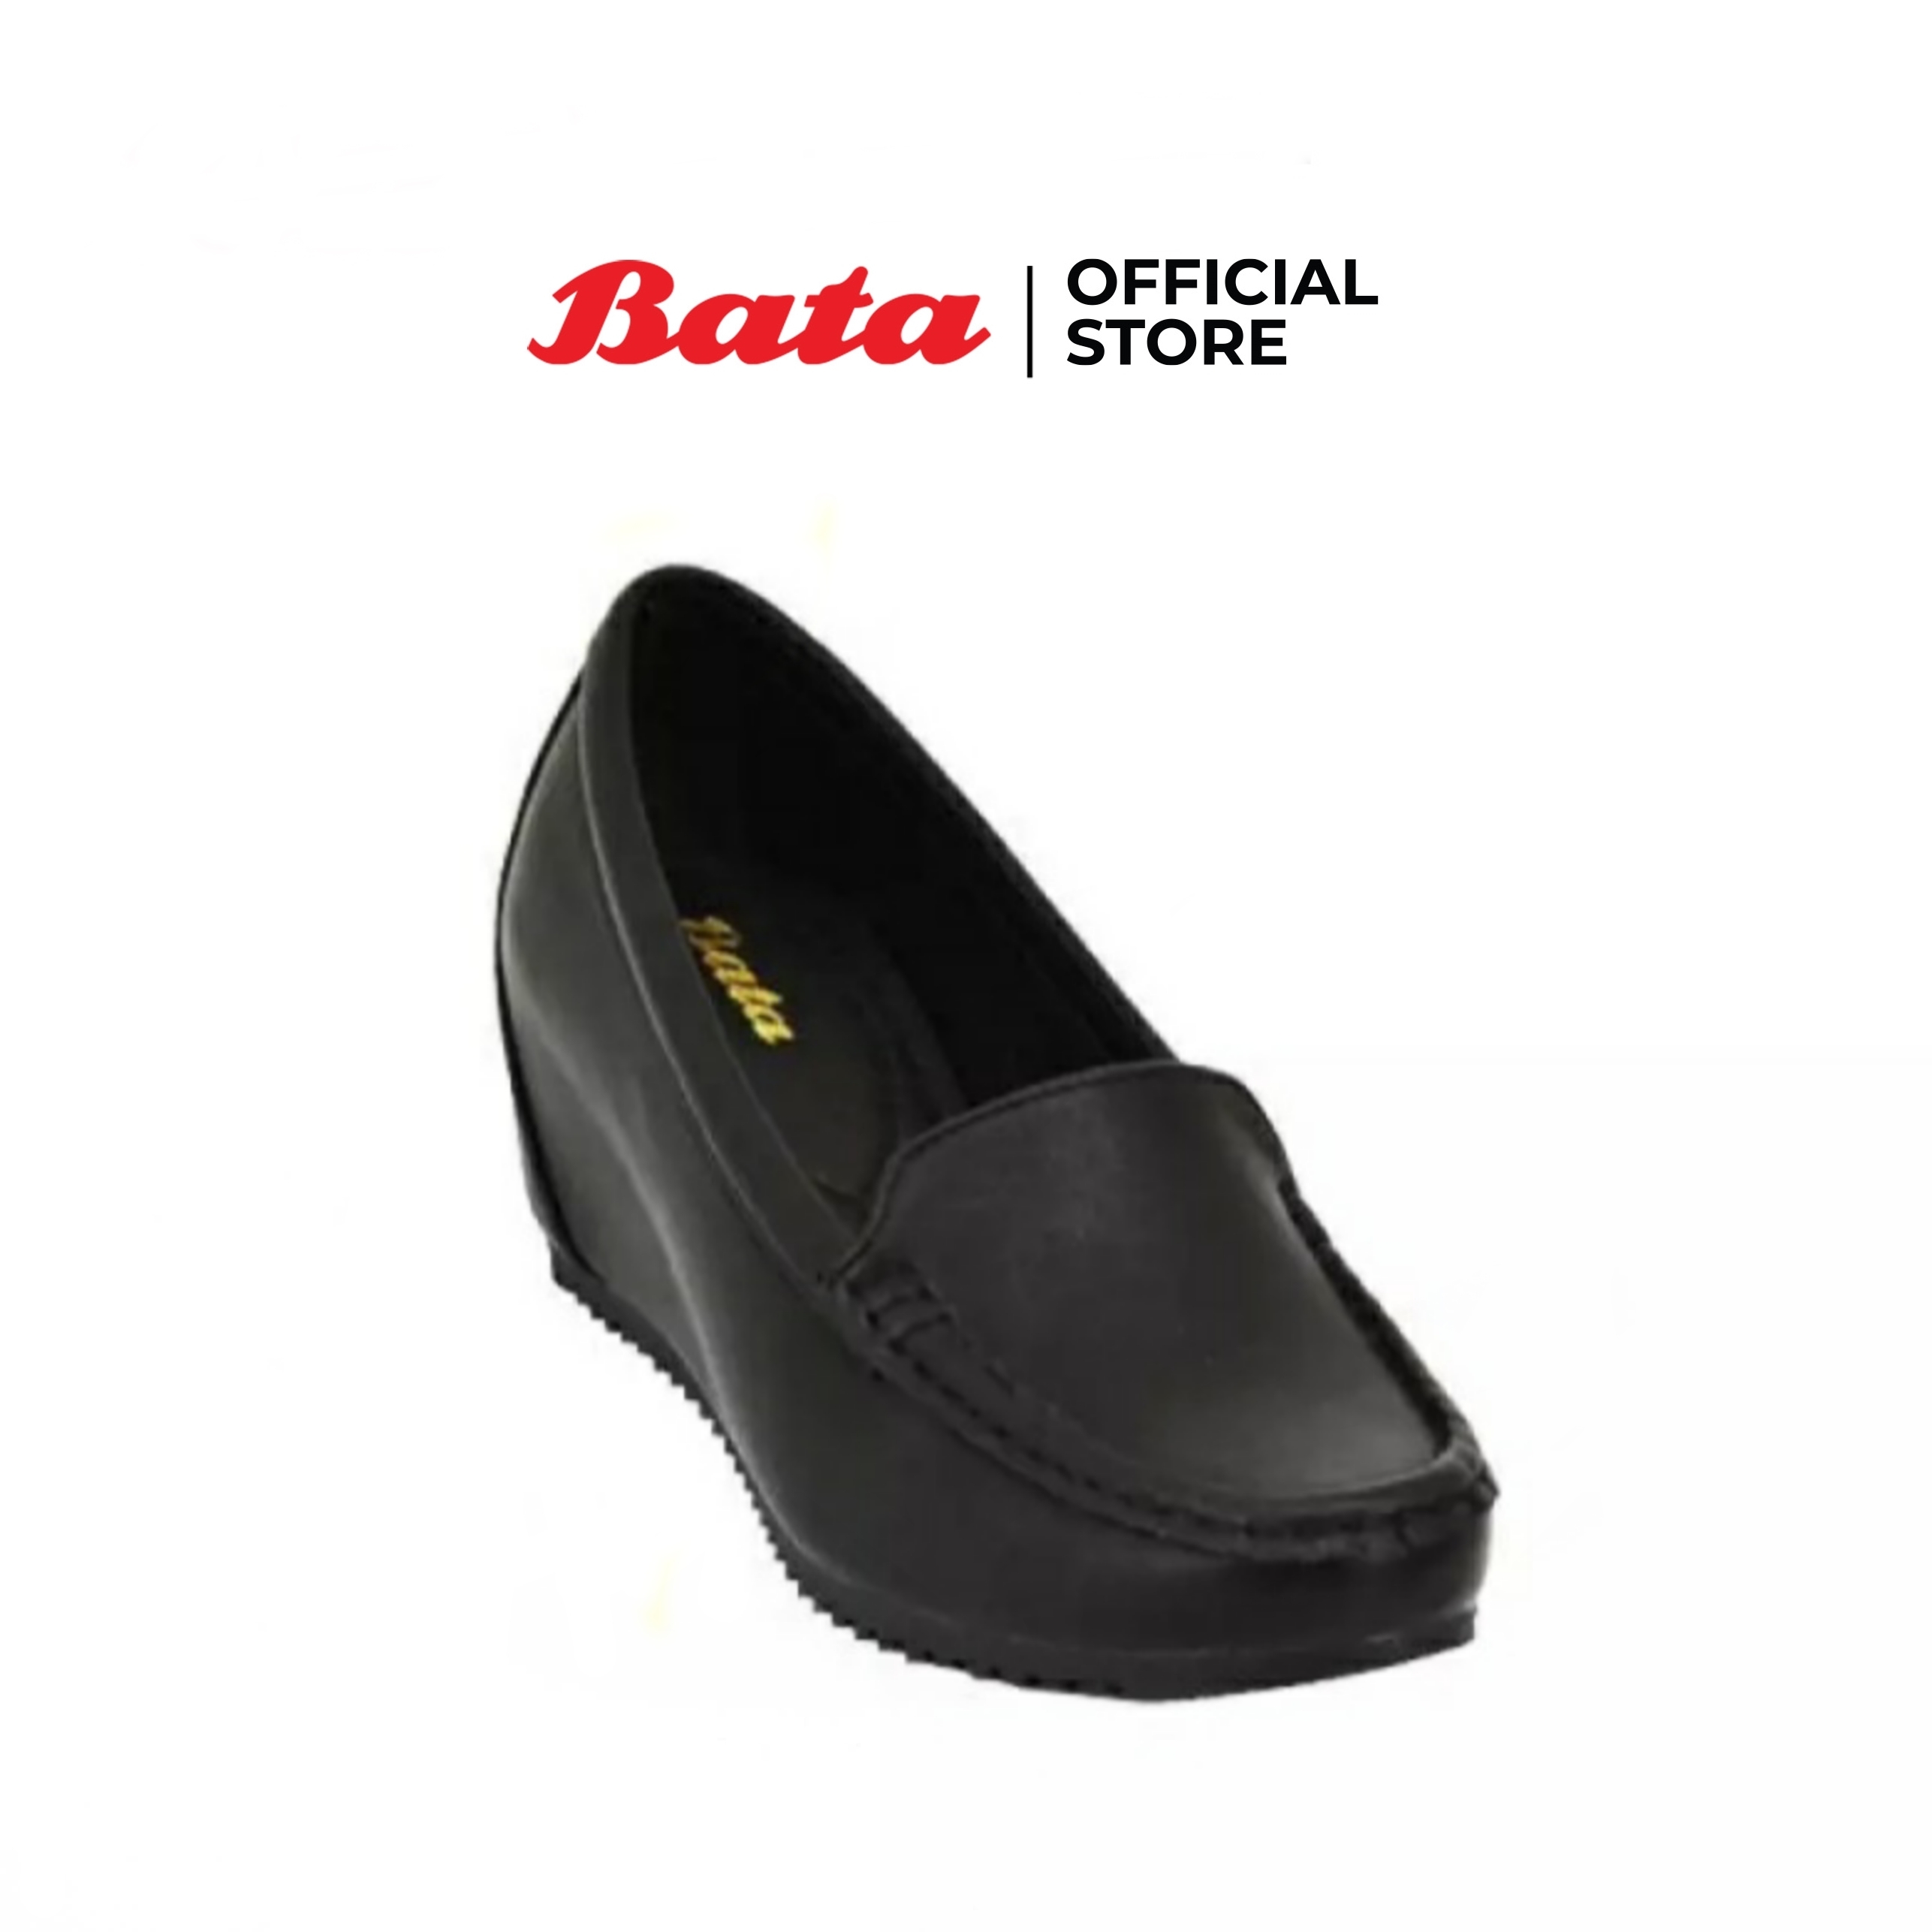 Bata LADIES'CASUAL รองเท้าลำลอง MOCCASINE ส้นสูง แบบสวม สีดำ รหัส 6516681 Ladiesflat Fashion